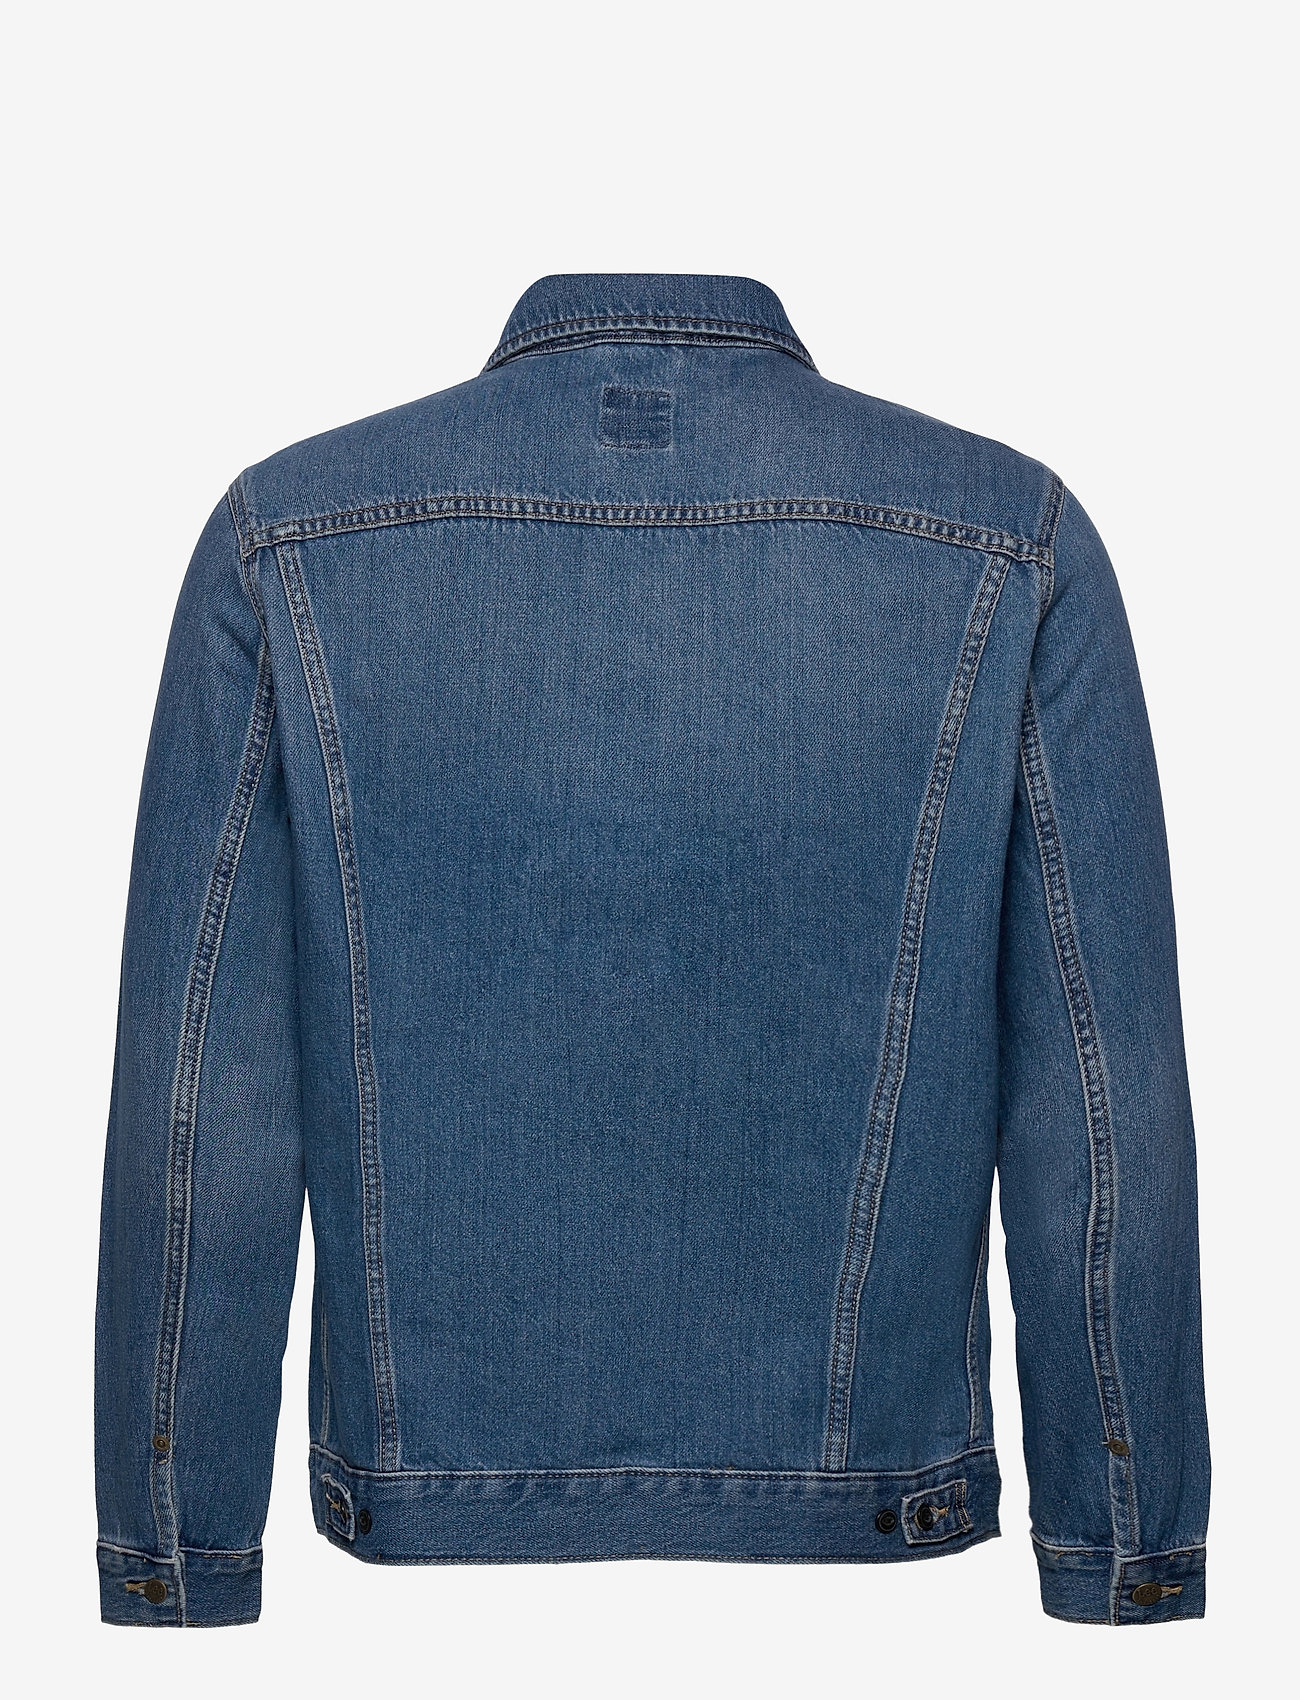 Lee Jeans - RIDER JACKET - džinsa jakas bez oderējuma - washed camden - 1